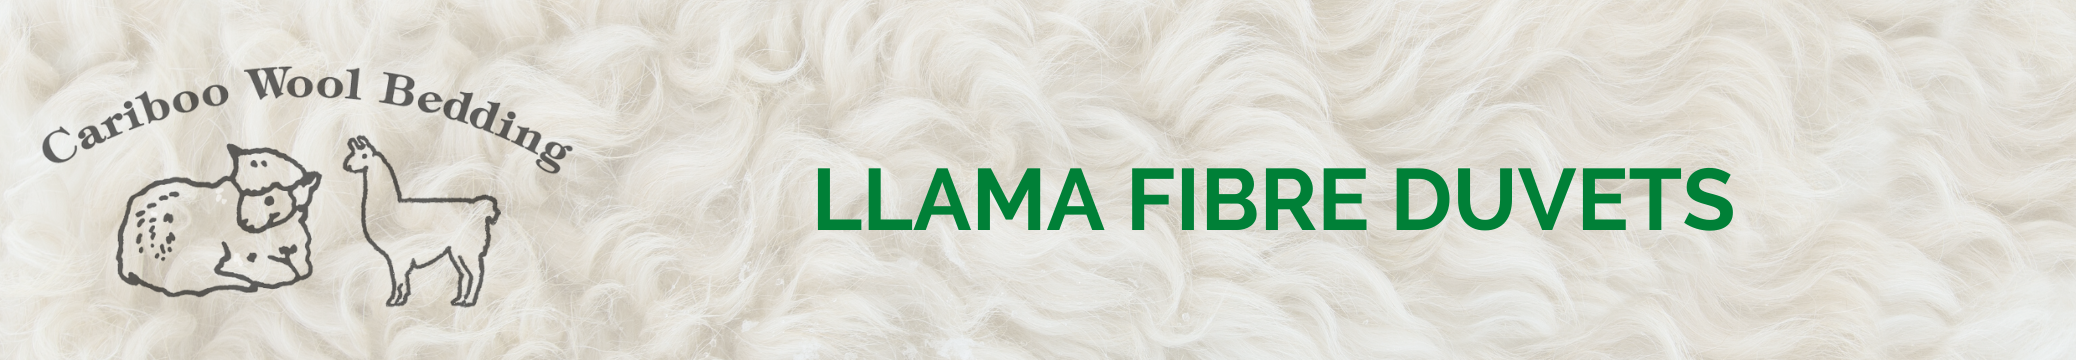 Llama Fibre Duvet Store